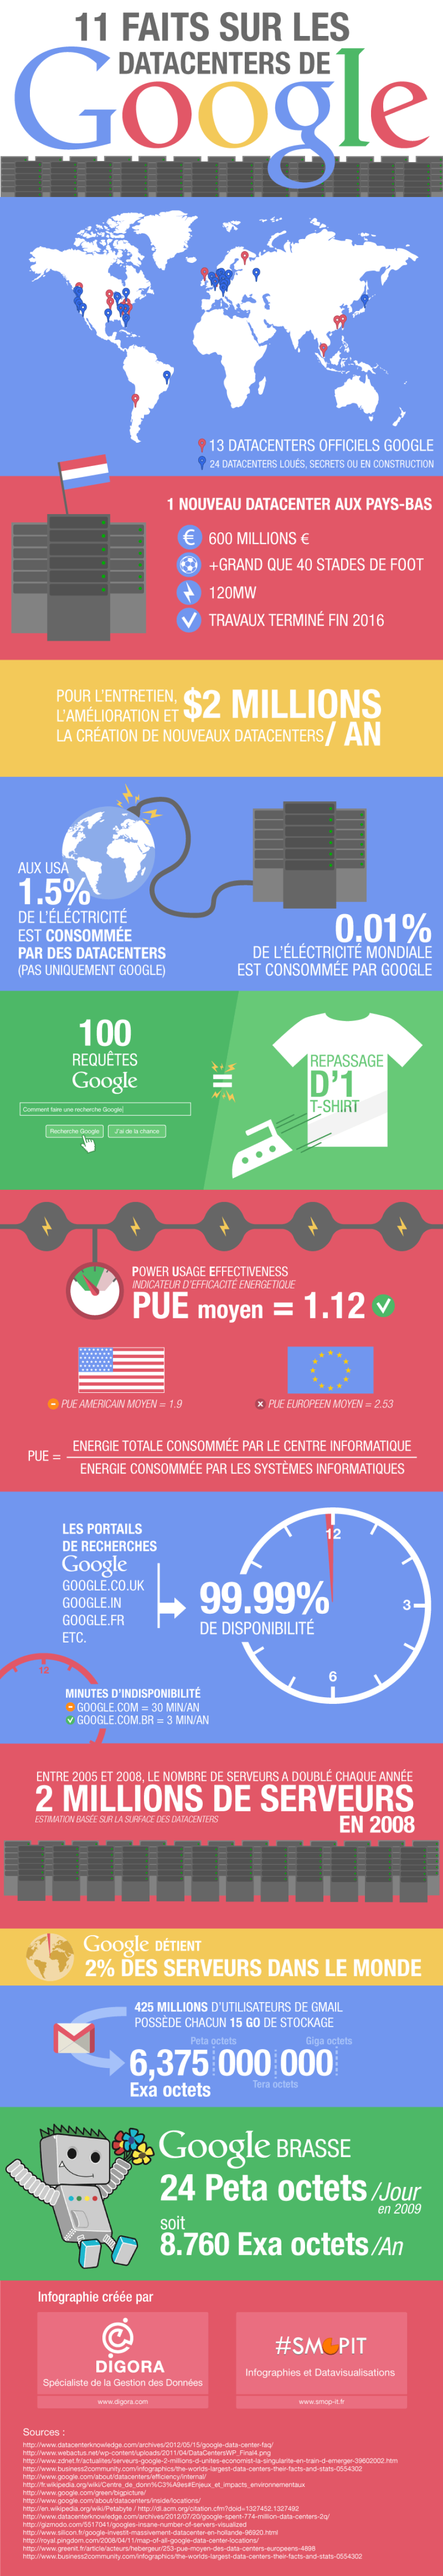 Infographie Datacenter Google